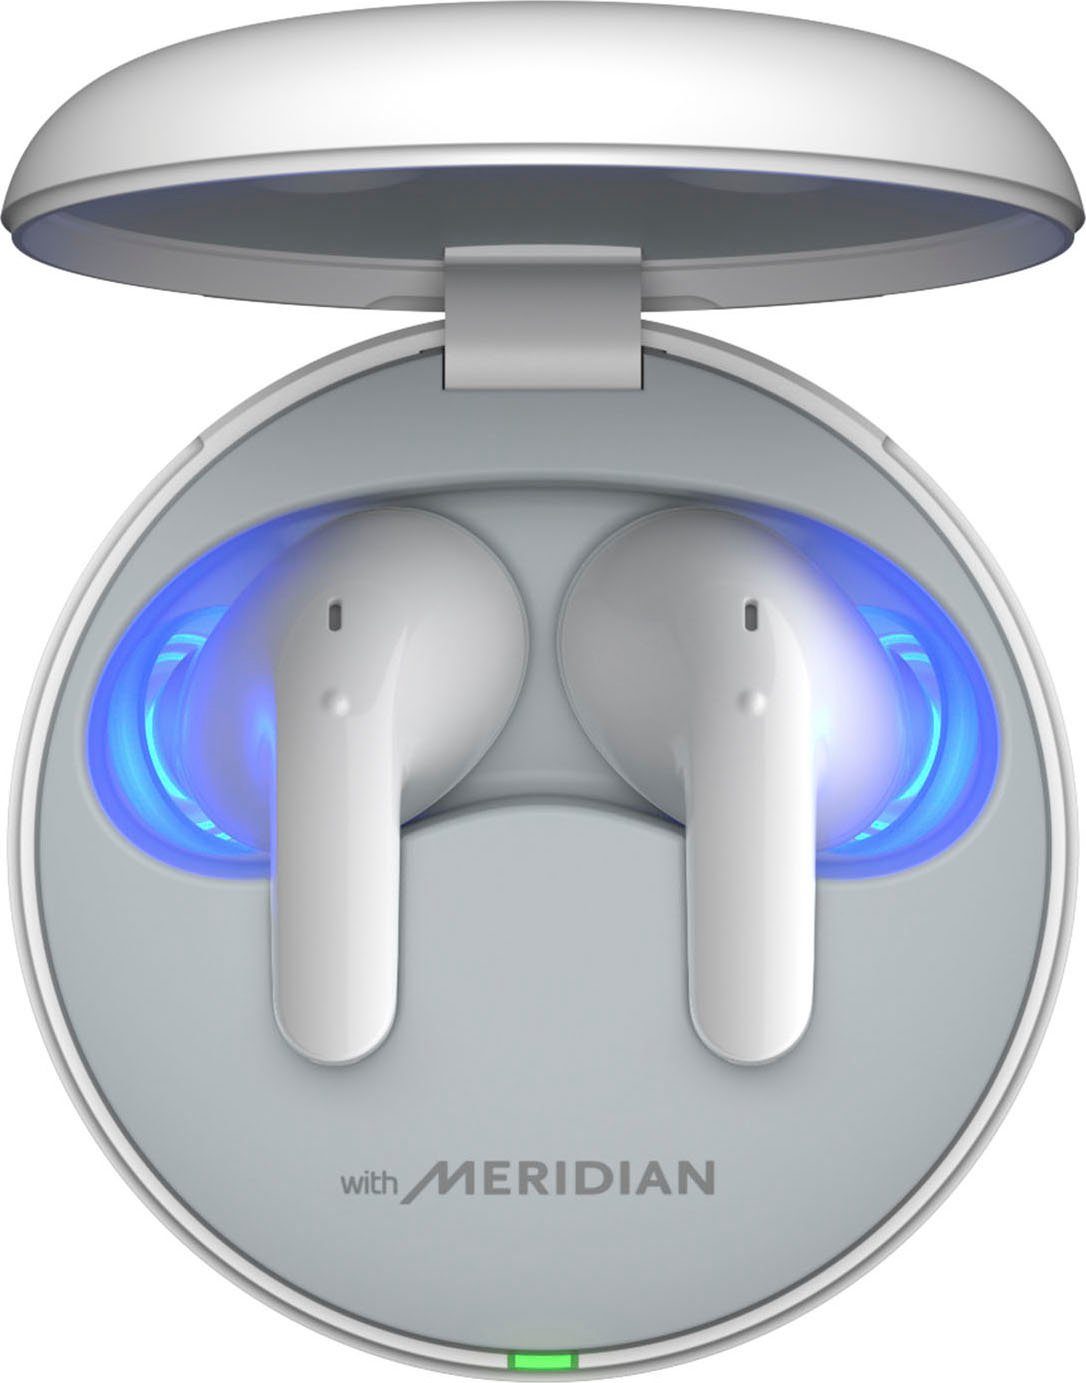 DT60Q In-Ear-Kopfhörer wireless Free TONE LG Weiß